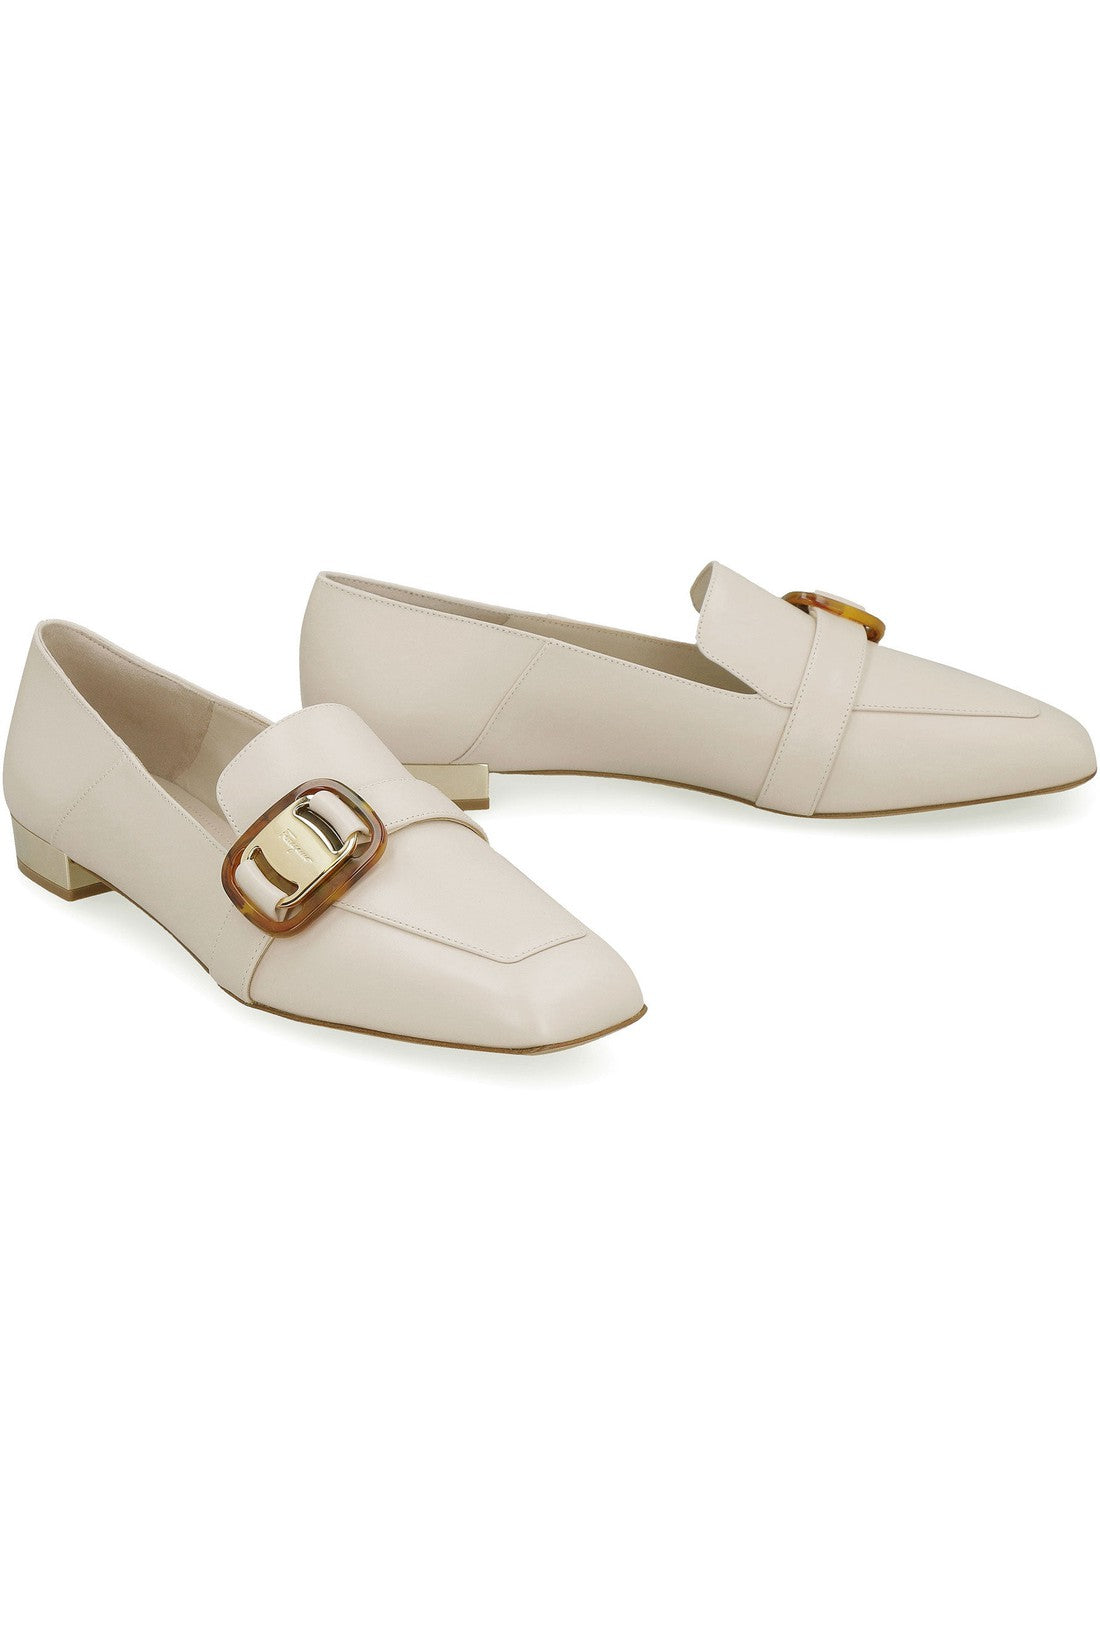 FERRAGAMO-OUTLET-SALE-Wang leather loafers-ARCHIVIST